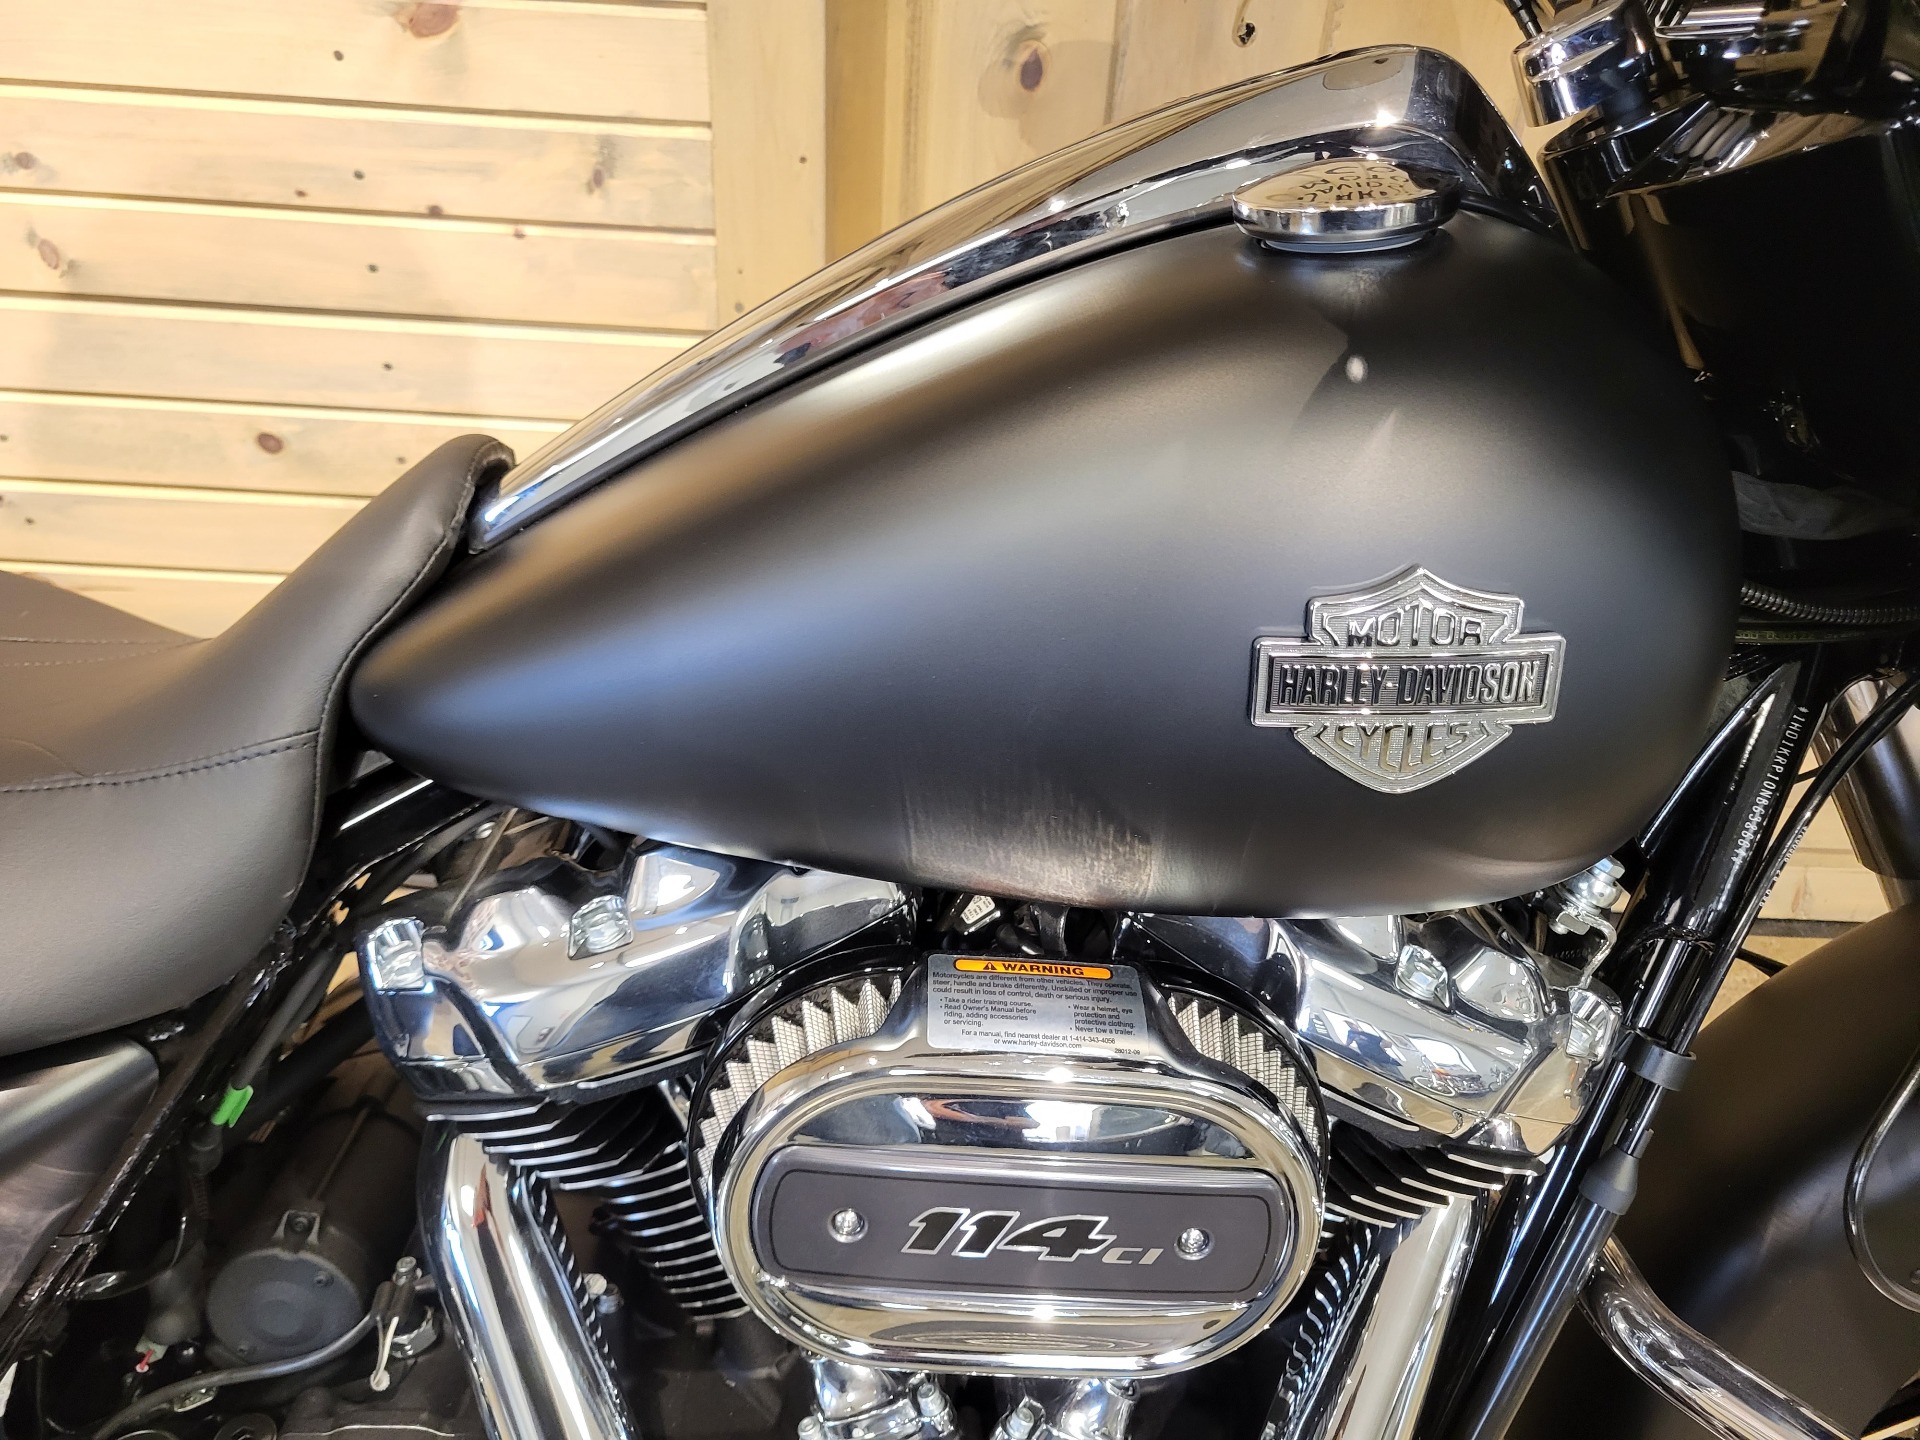 2022 Harley-Davidson Street Glide® Special in Mentor, Ohio - Photo 2